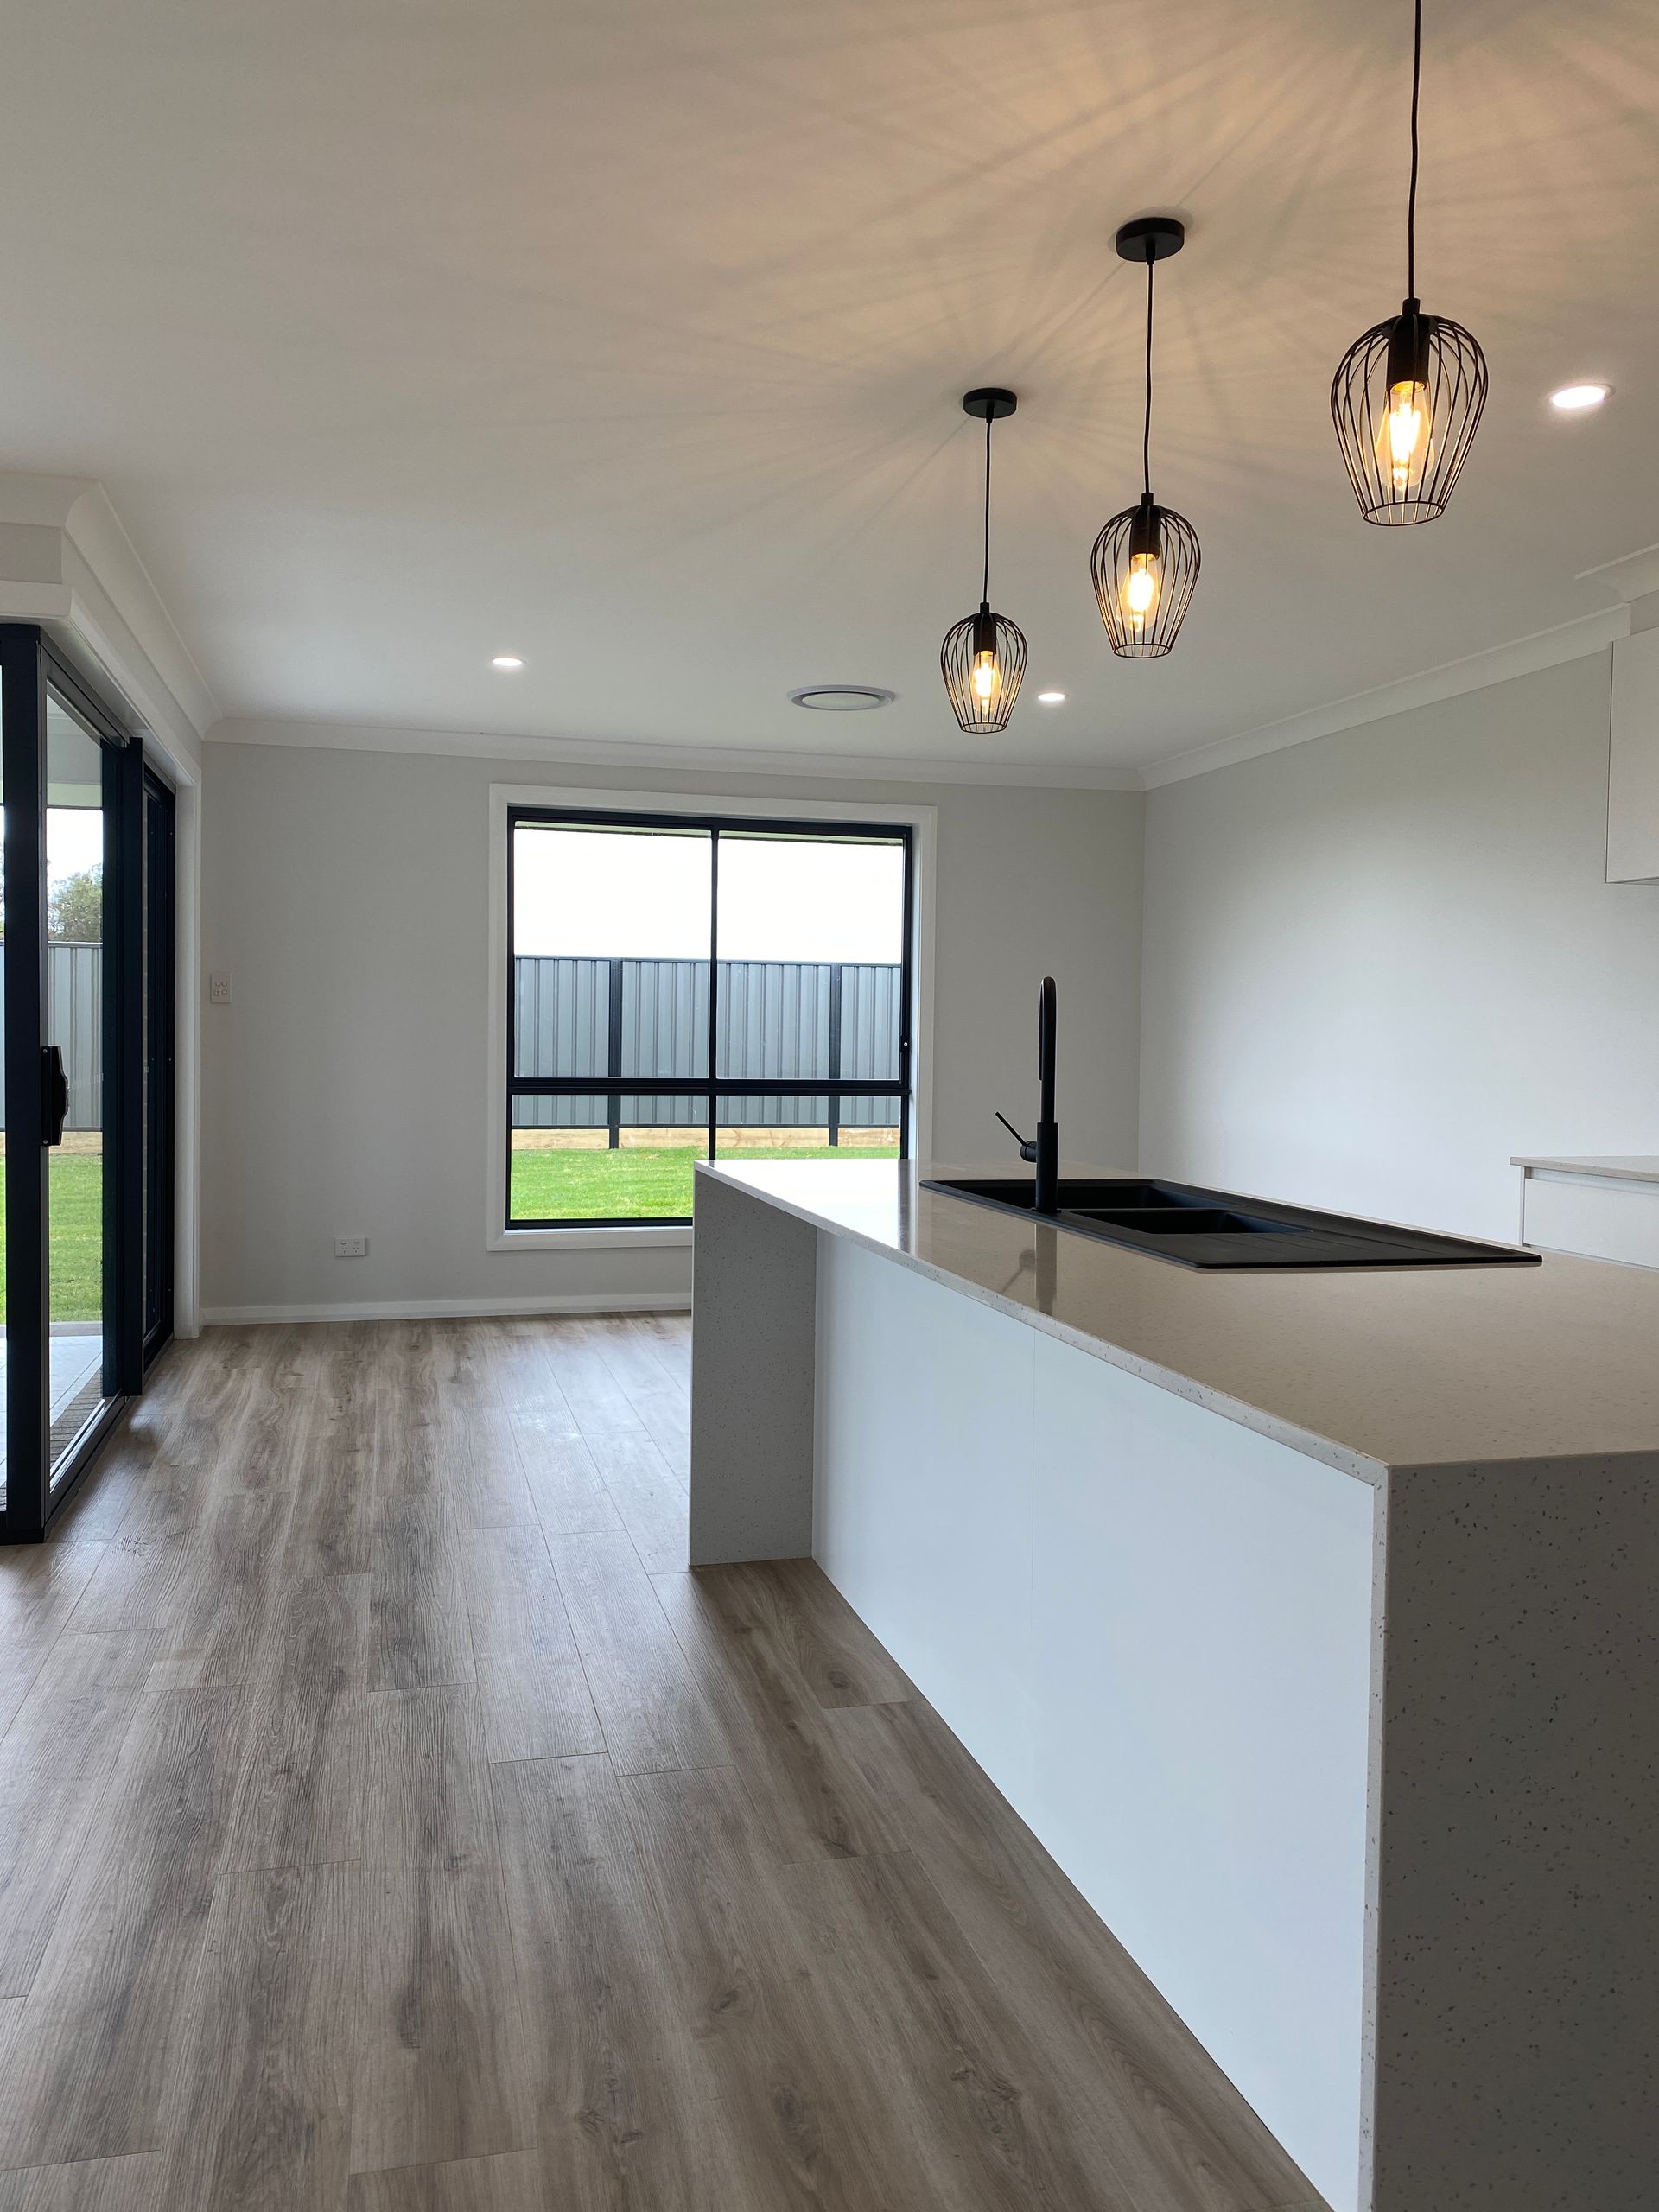 New Empty Build Kitchen — Kitchen Renovations in Dubbo, QLD